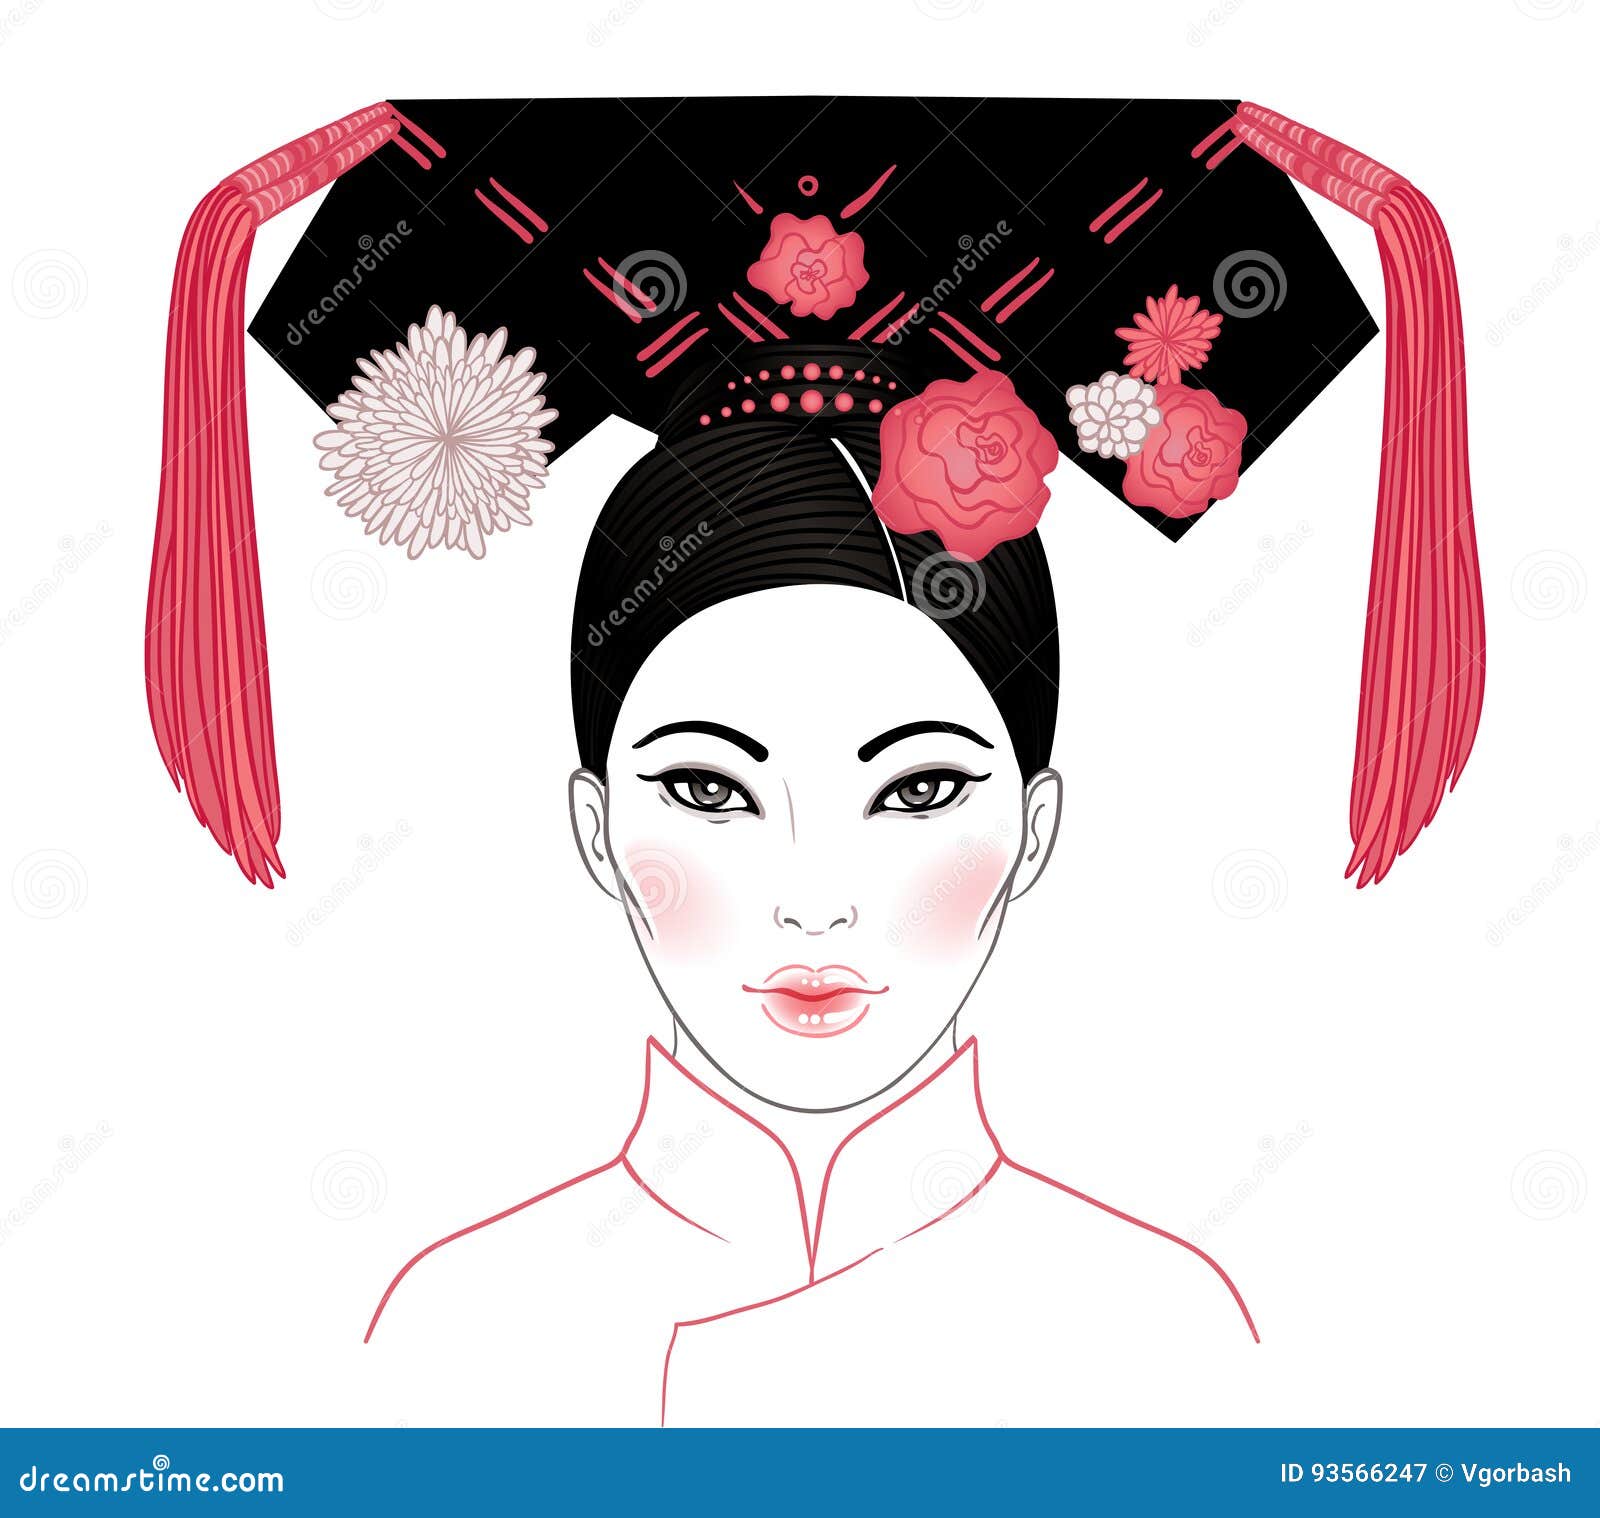 chinesegirl chinese hairstyle is too simple | TikTok